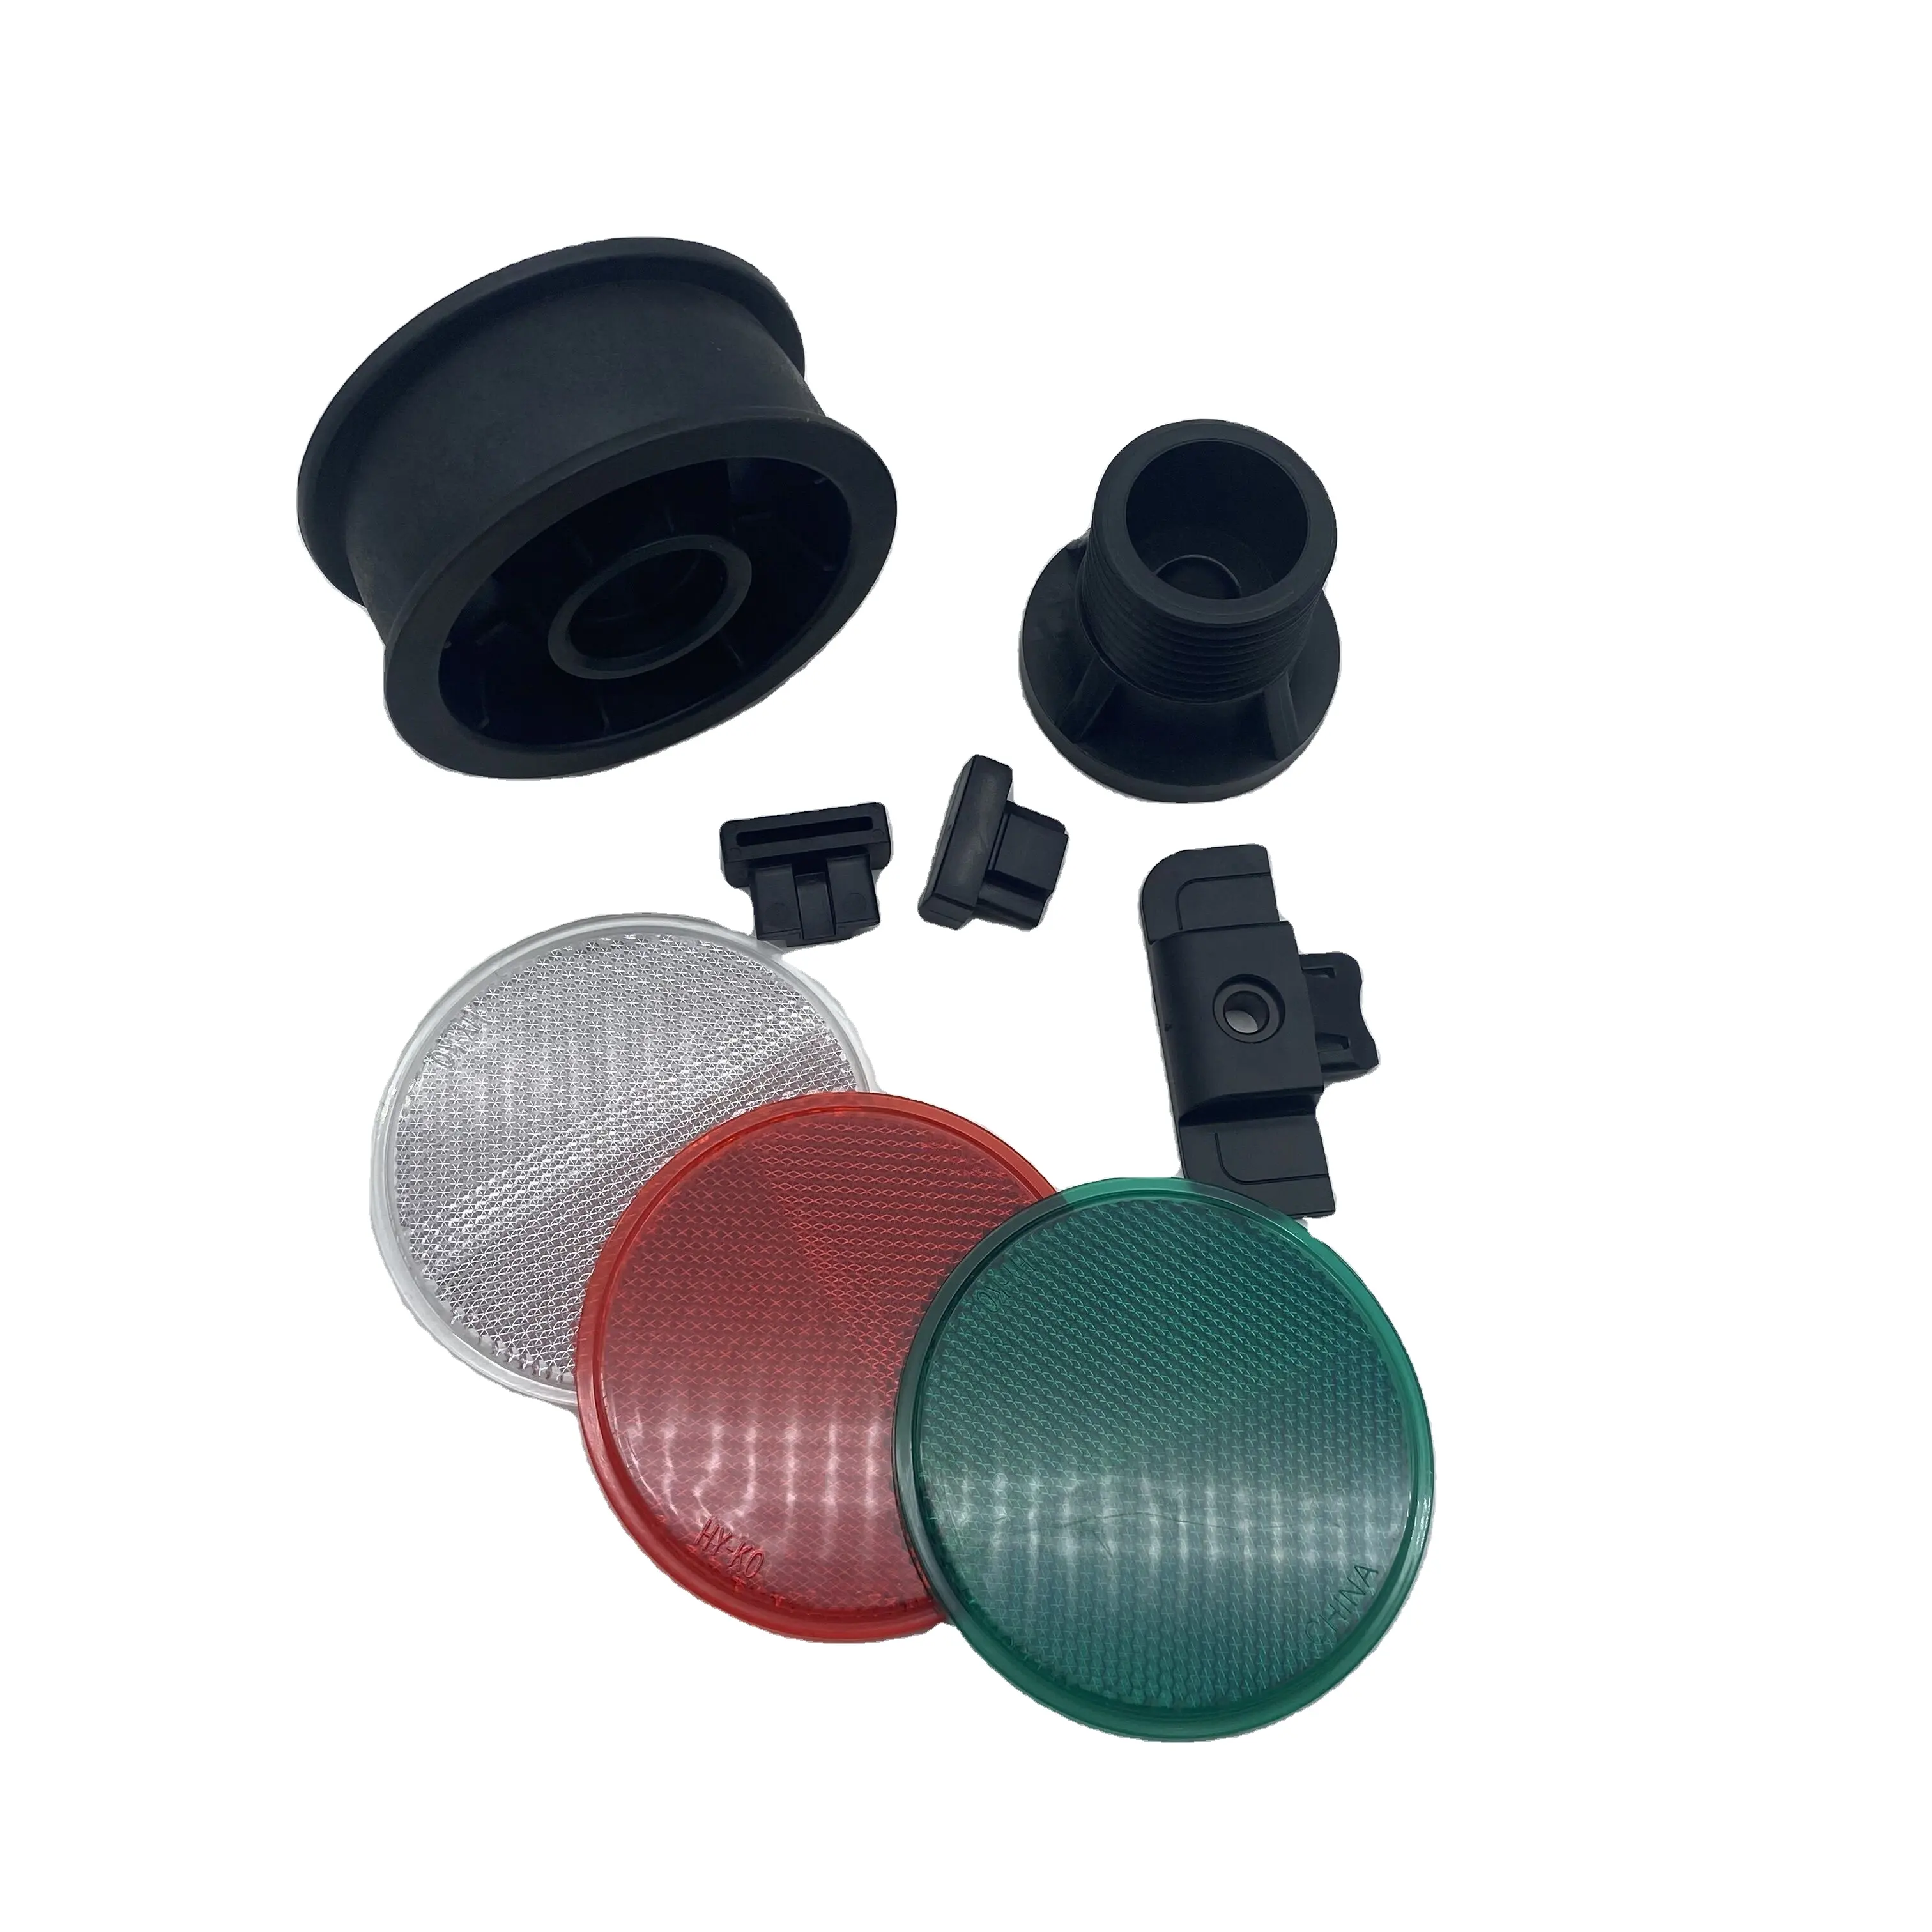 लोकप्रिय डिजाइन आकार छोटे प्लास्टिक पार्ट्स कस्टम विनिर्माण एबीएस पीपी इंजेक्शन मोल्डिंग पार्ट्स